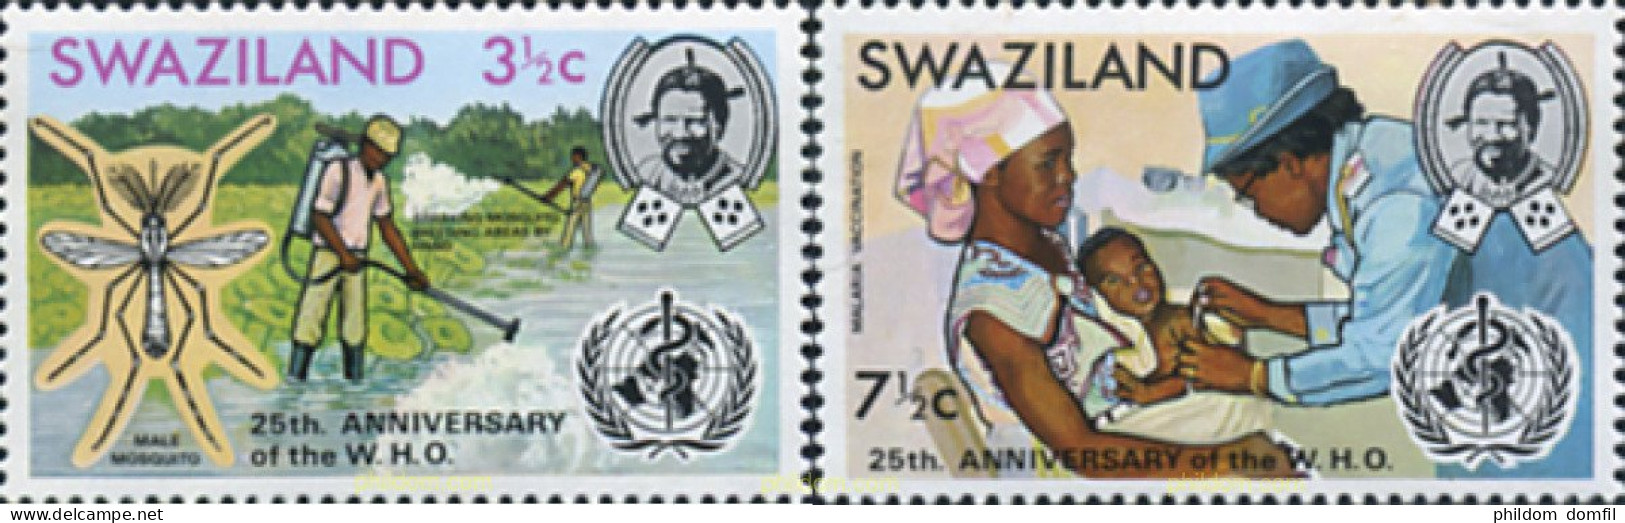 329528 MNH SWAZILANDIA 1973 25 ANIVERSARIO DE W.H.G. - Arañas